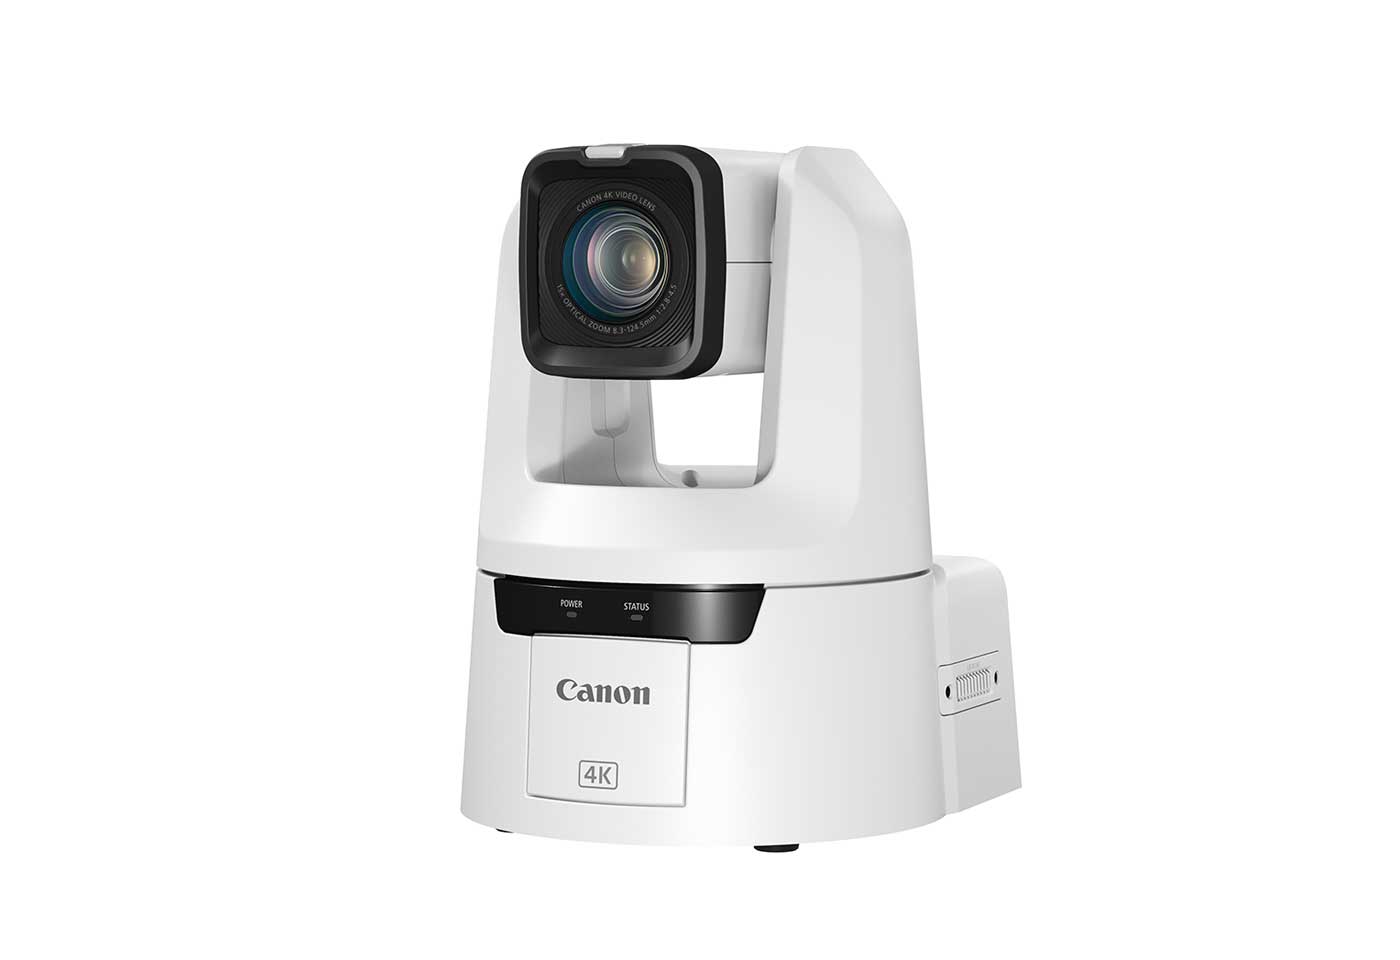 CR-N700 remote camera in white